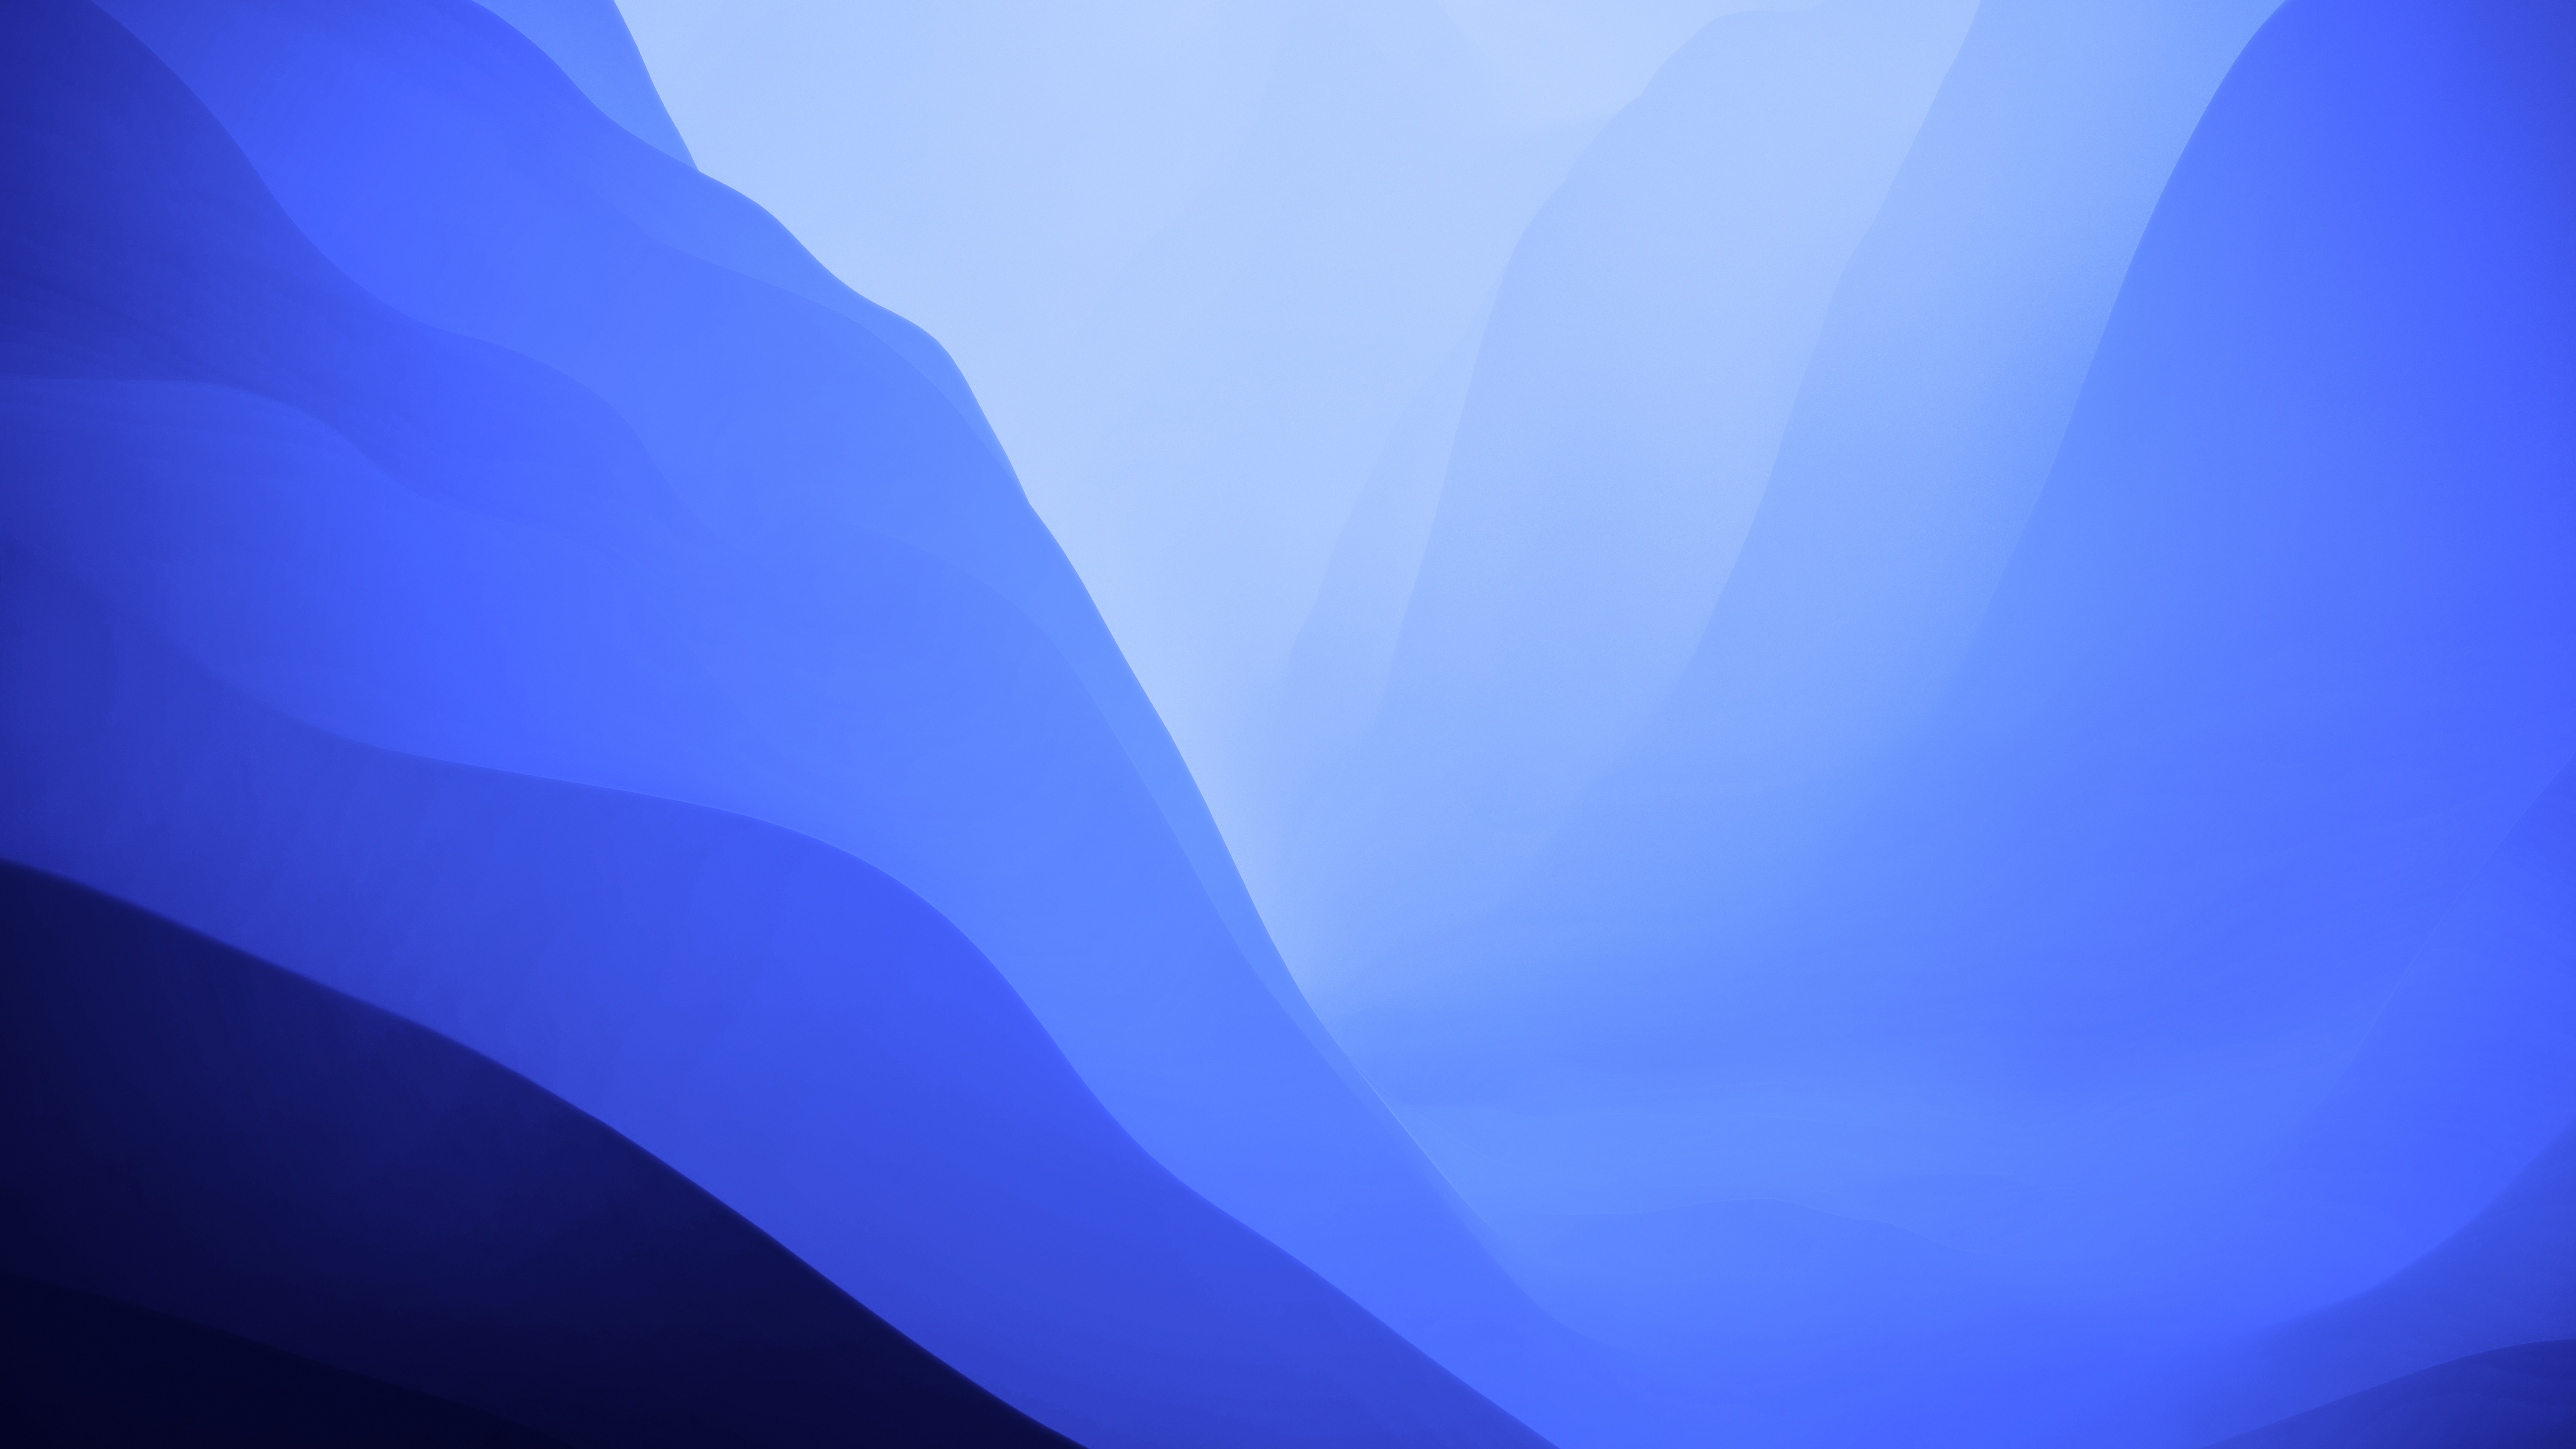 Light Blue Background With Bubbles Ultra HD Desktop Background Wallpaper  for 4K UHD TV : Widescreen & UltraWide Desktop & Laptop : Multi Display,  Dual Monitor : Tablet : Smartphone